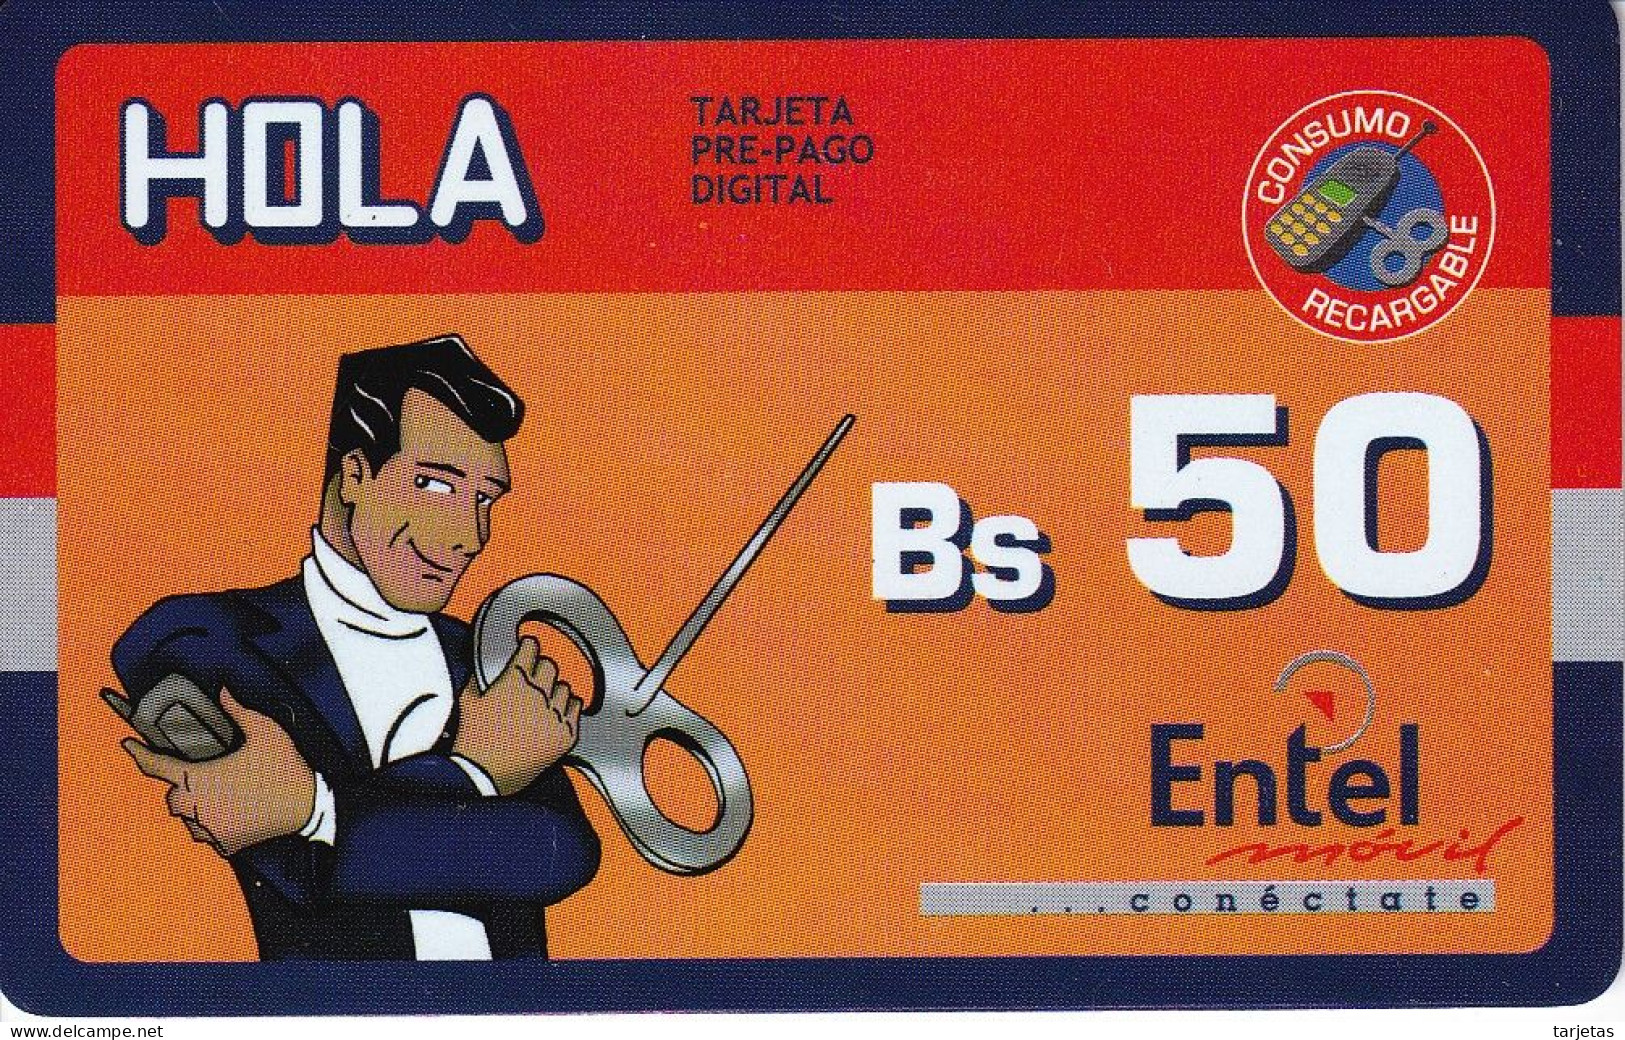 TARJETA DE BOLIVIA DE Bs 50 DE ENTEL - CLUB HOLA - 1 PUNTO - Bolivia